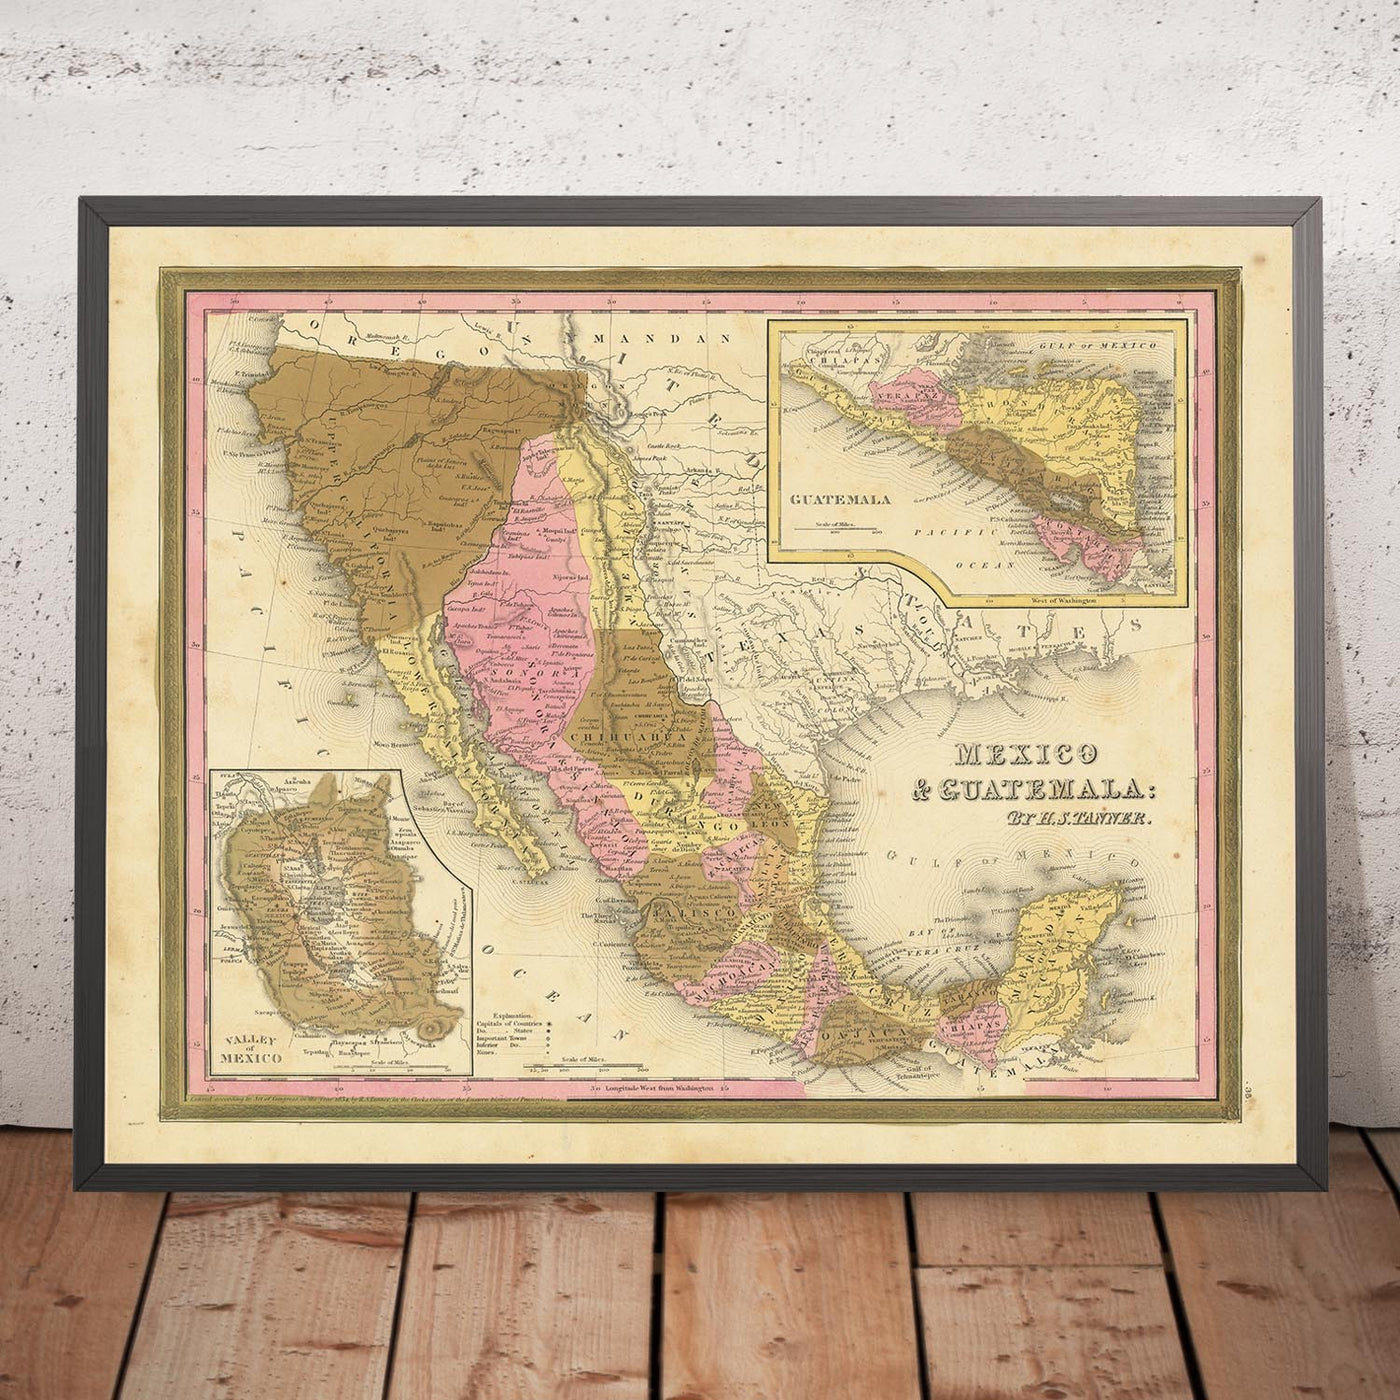 Old Map of Mexico, Guatemala, Texas, California by H.S. Tanner, 1839: Mexico City, Puebla, Los Angeles, San Francisco, Austin, Houston